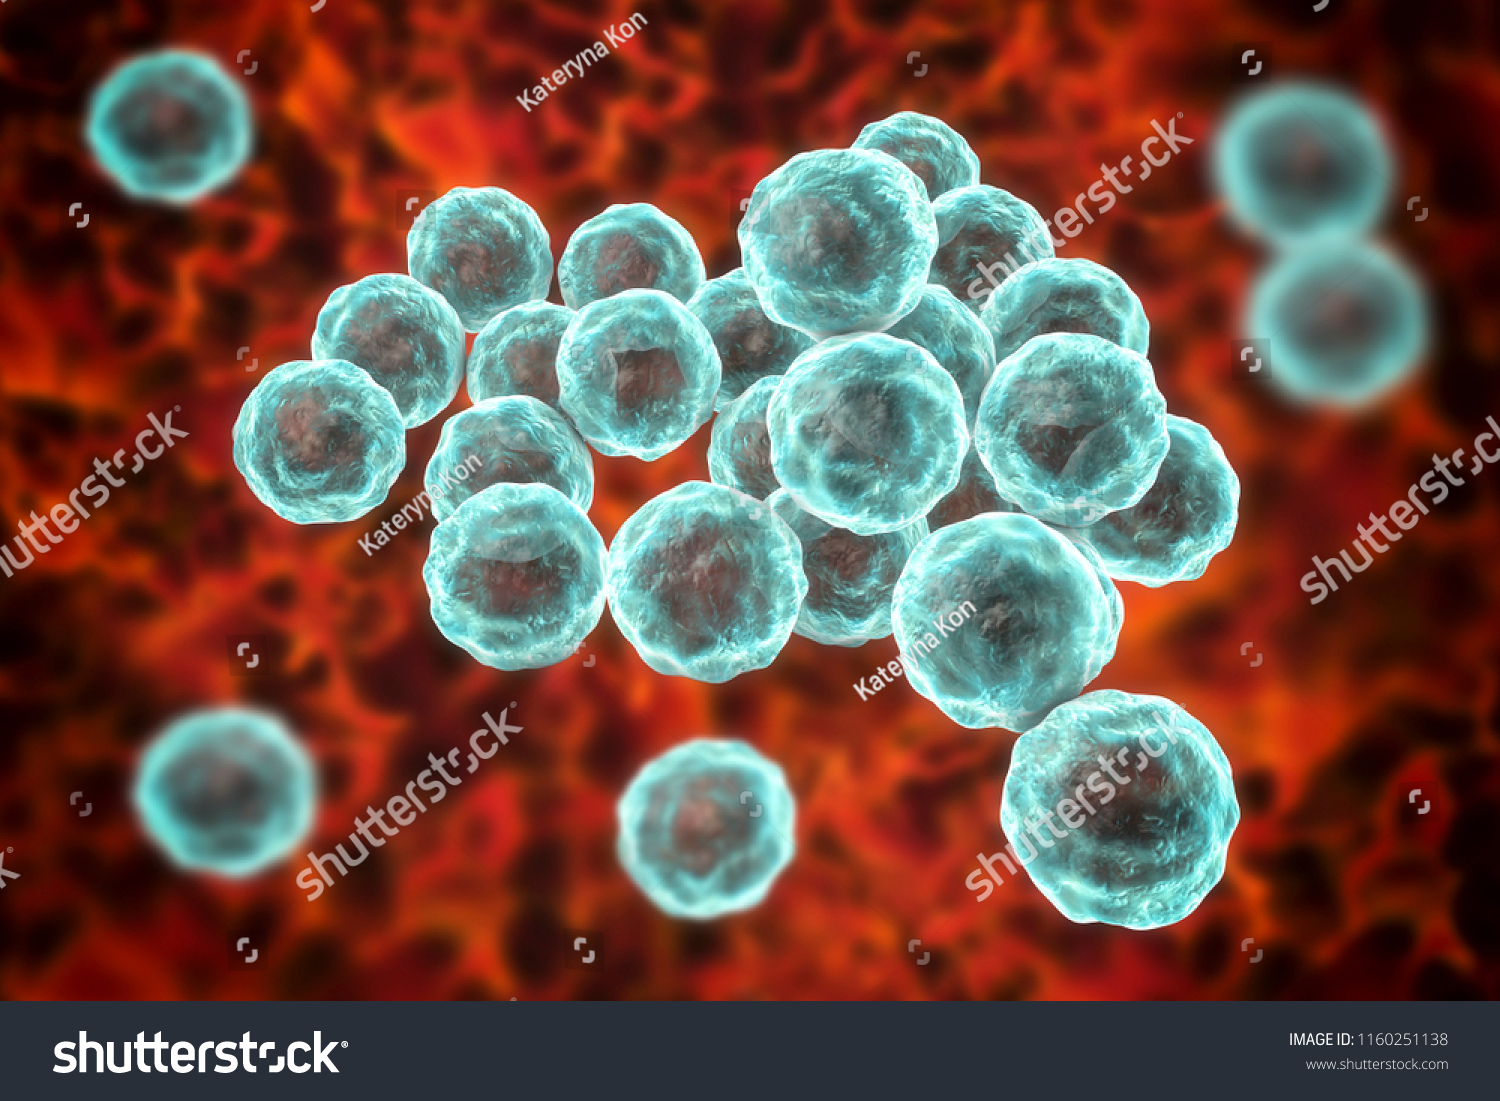 Chlamydia Trachomatis Bacteria 3d Illustration Causative Stock Illustration 1160251138 0644